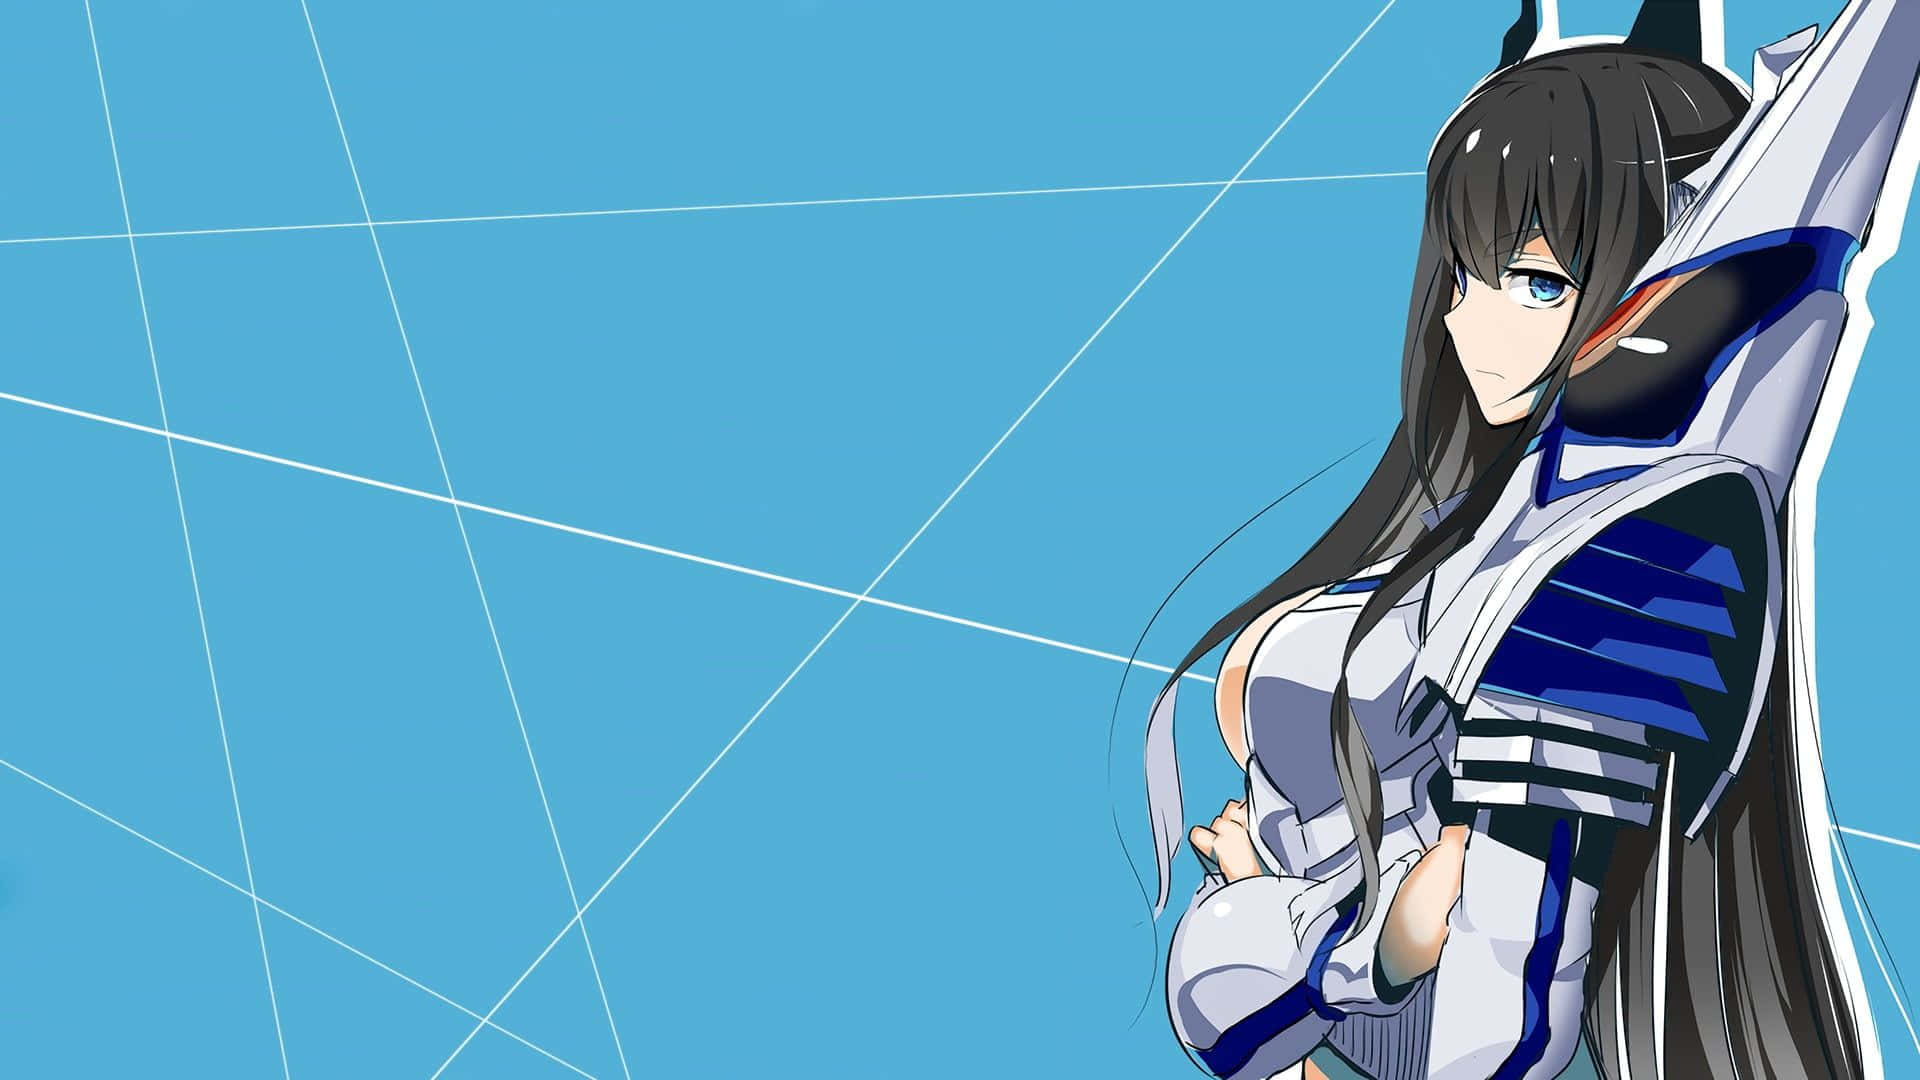 Satsuki Kiryuin is ready to take on the world in her Honnouji Academy uniform. Wallpaper